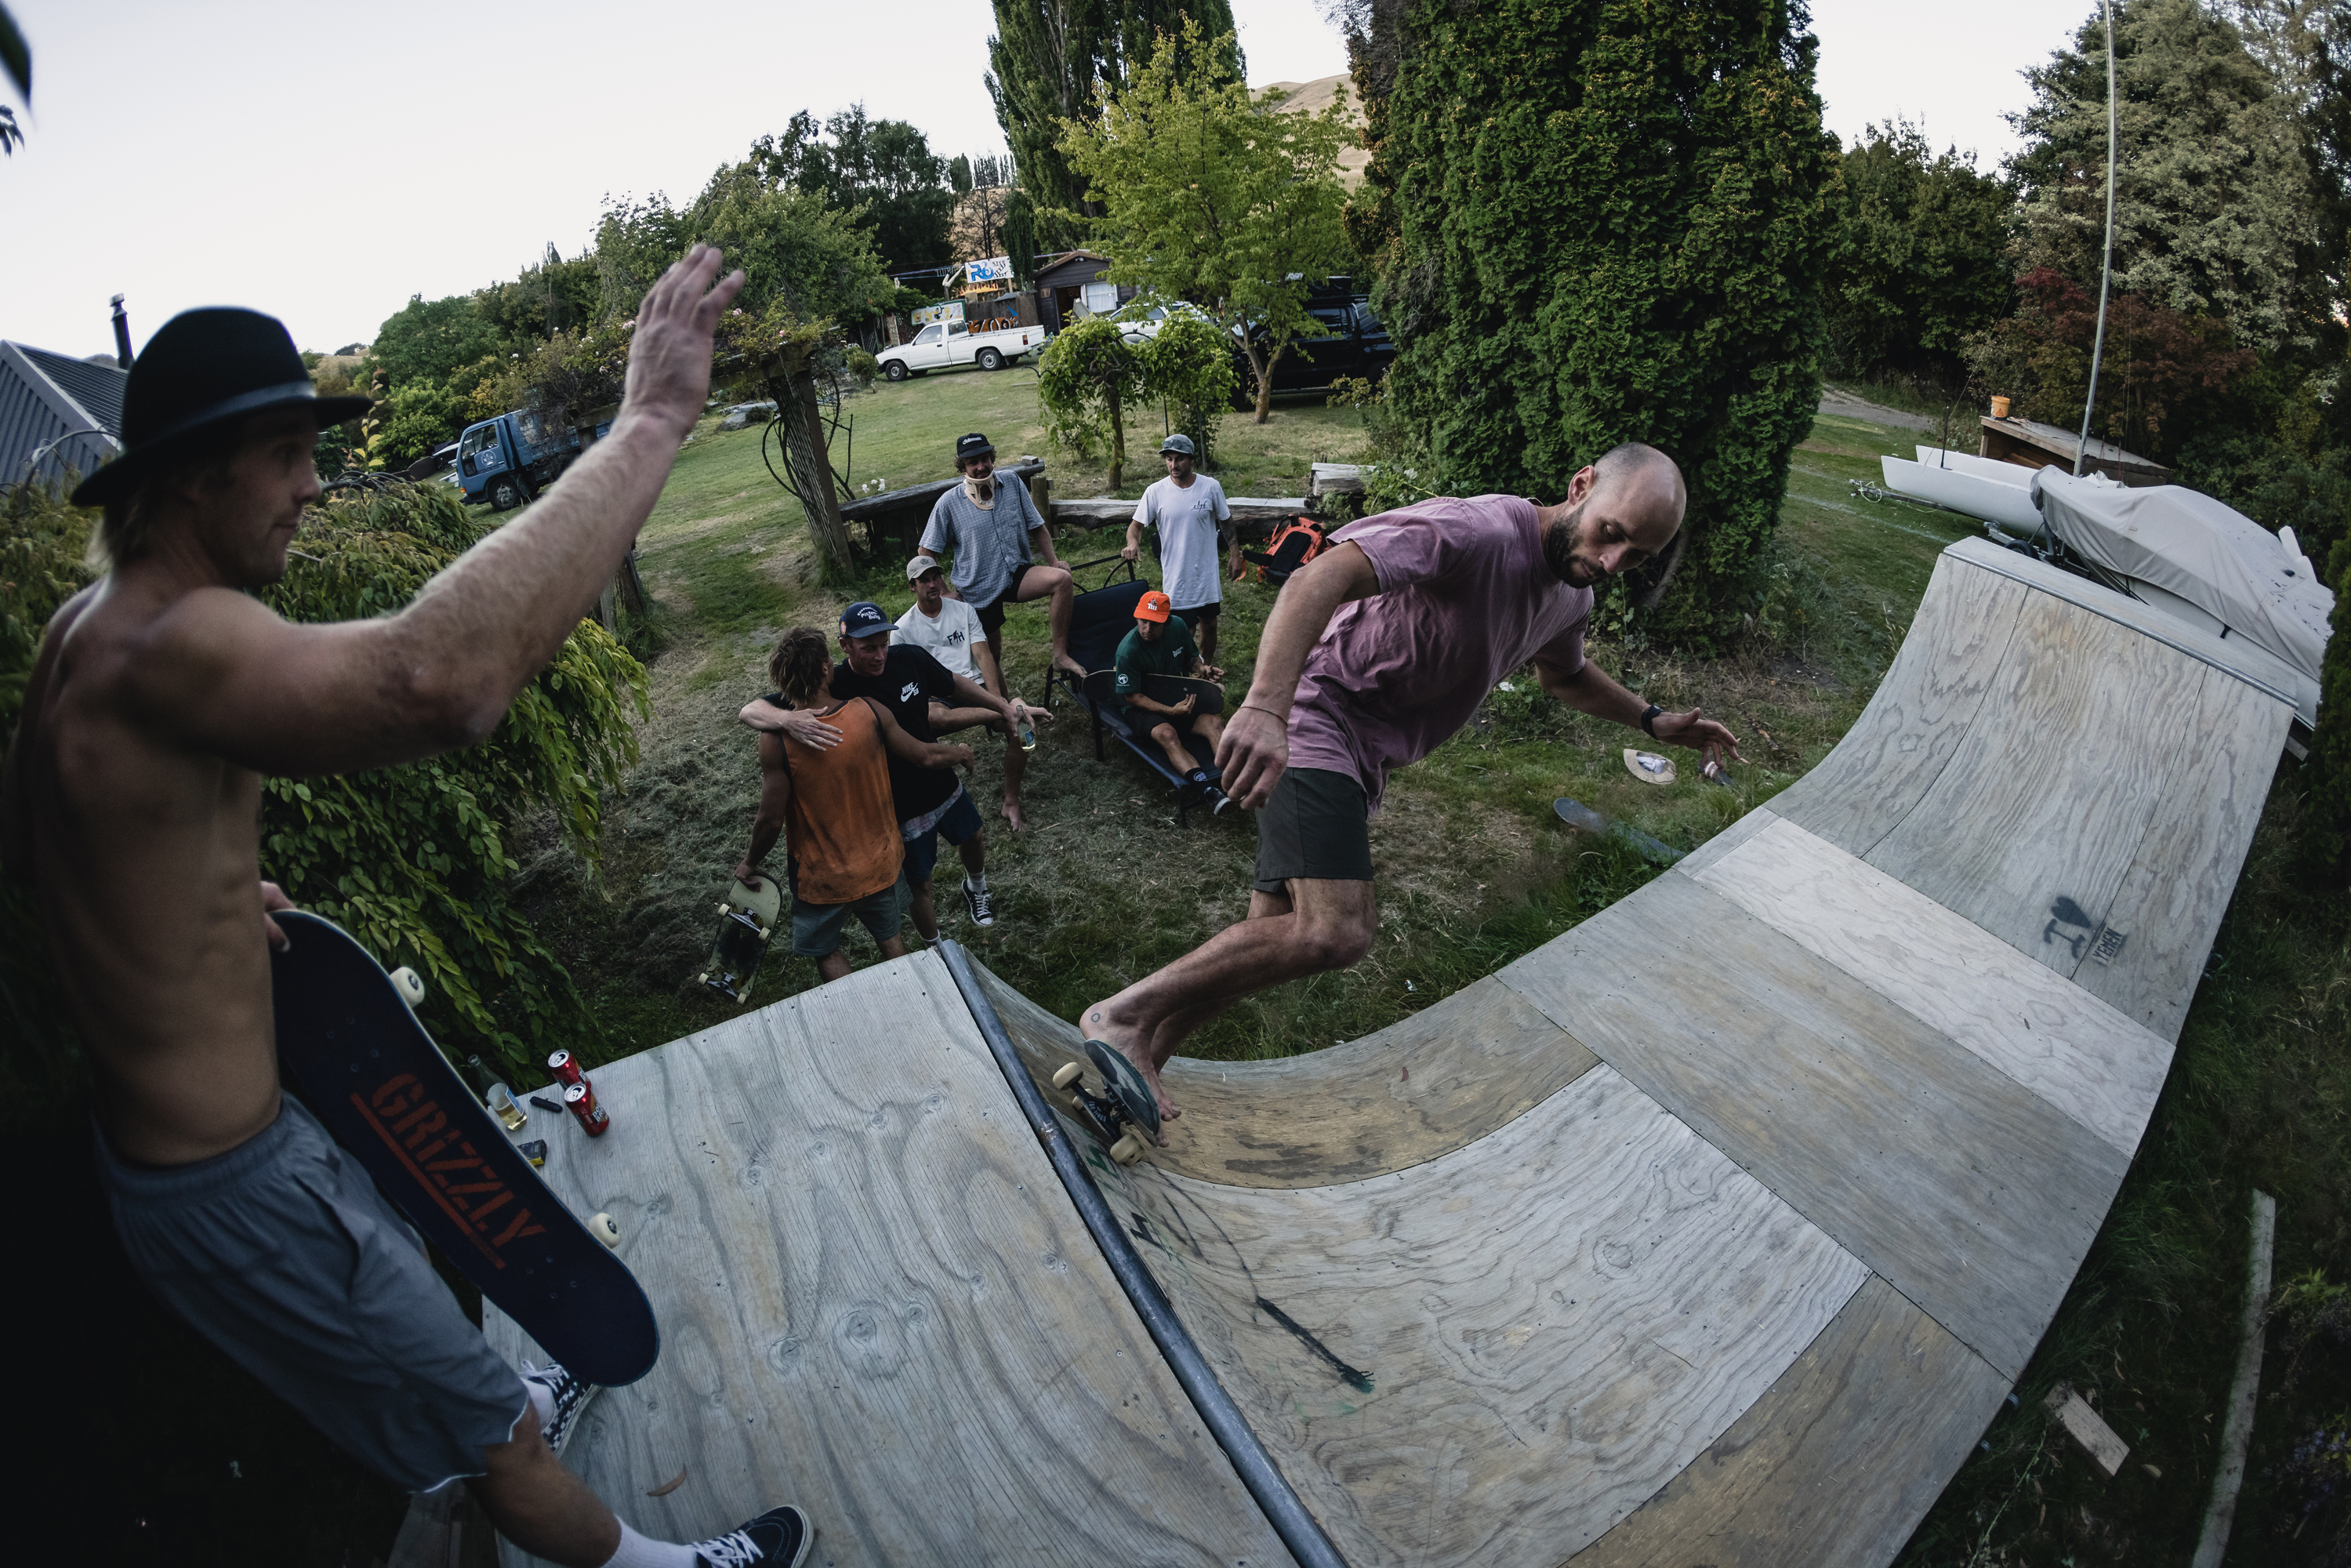 Eddie Masters skateboarding on a backyard mini ramp